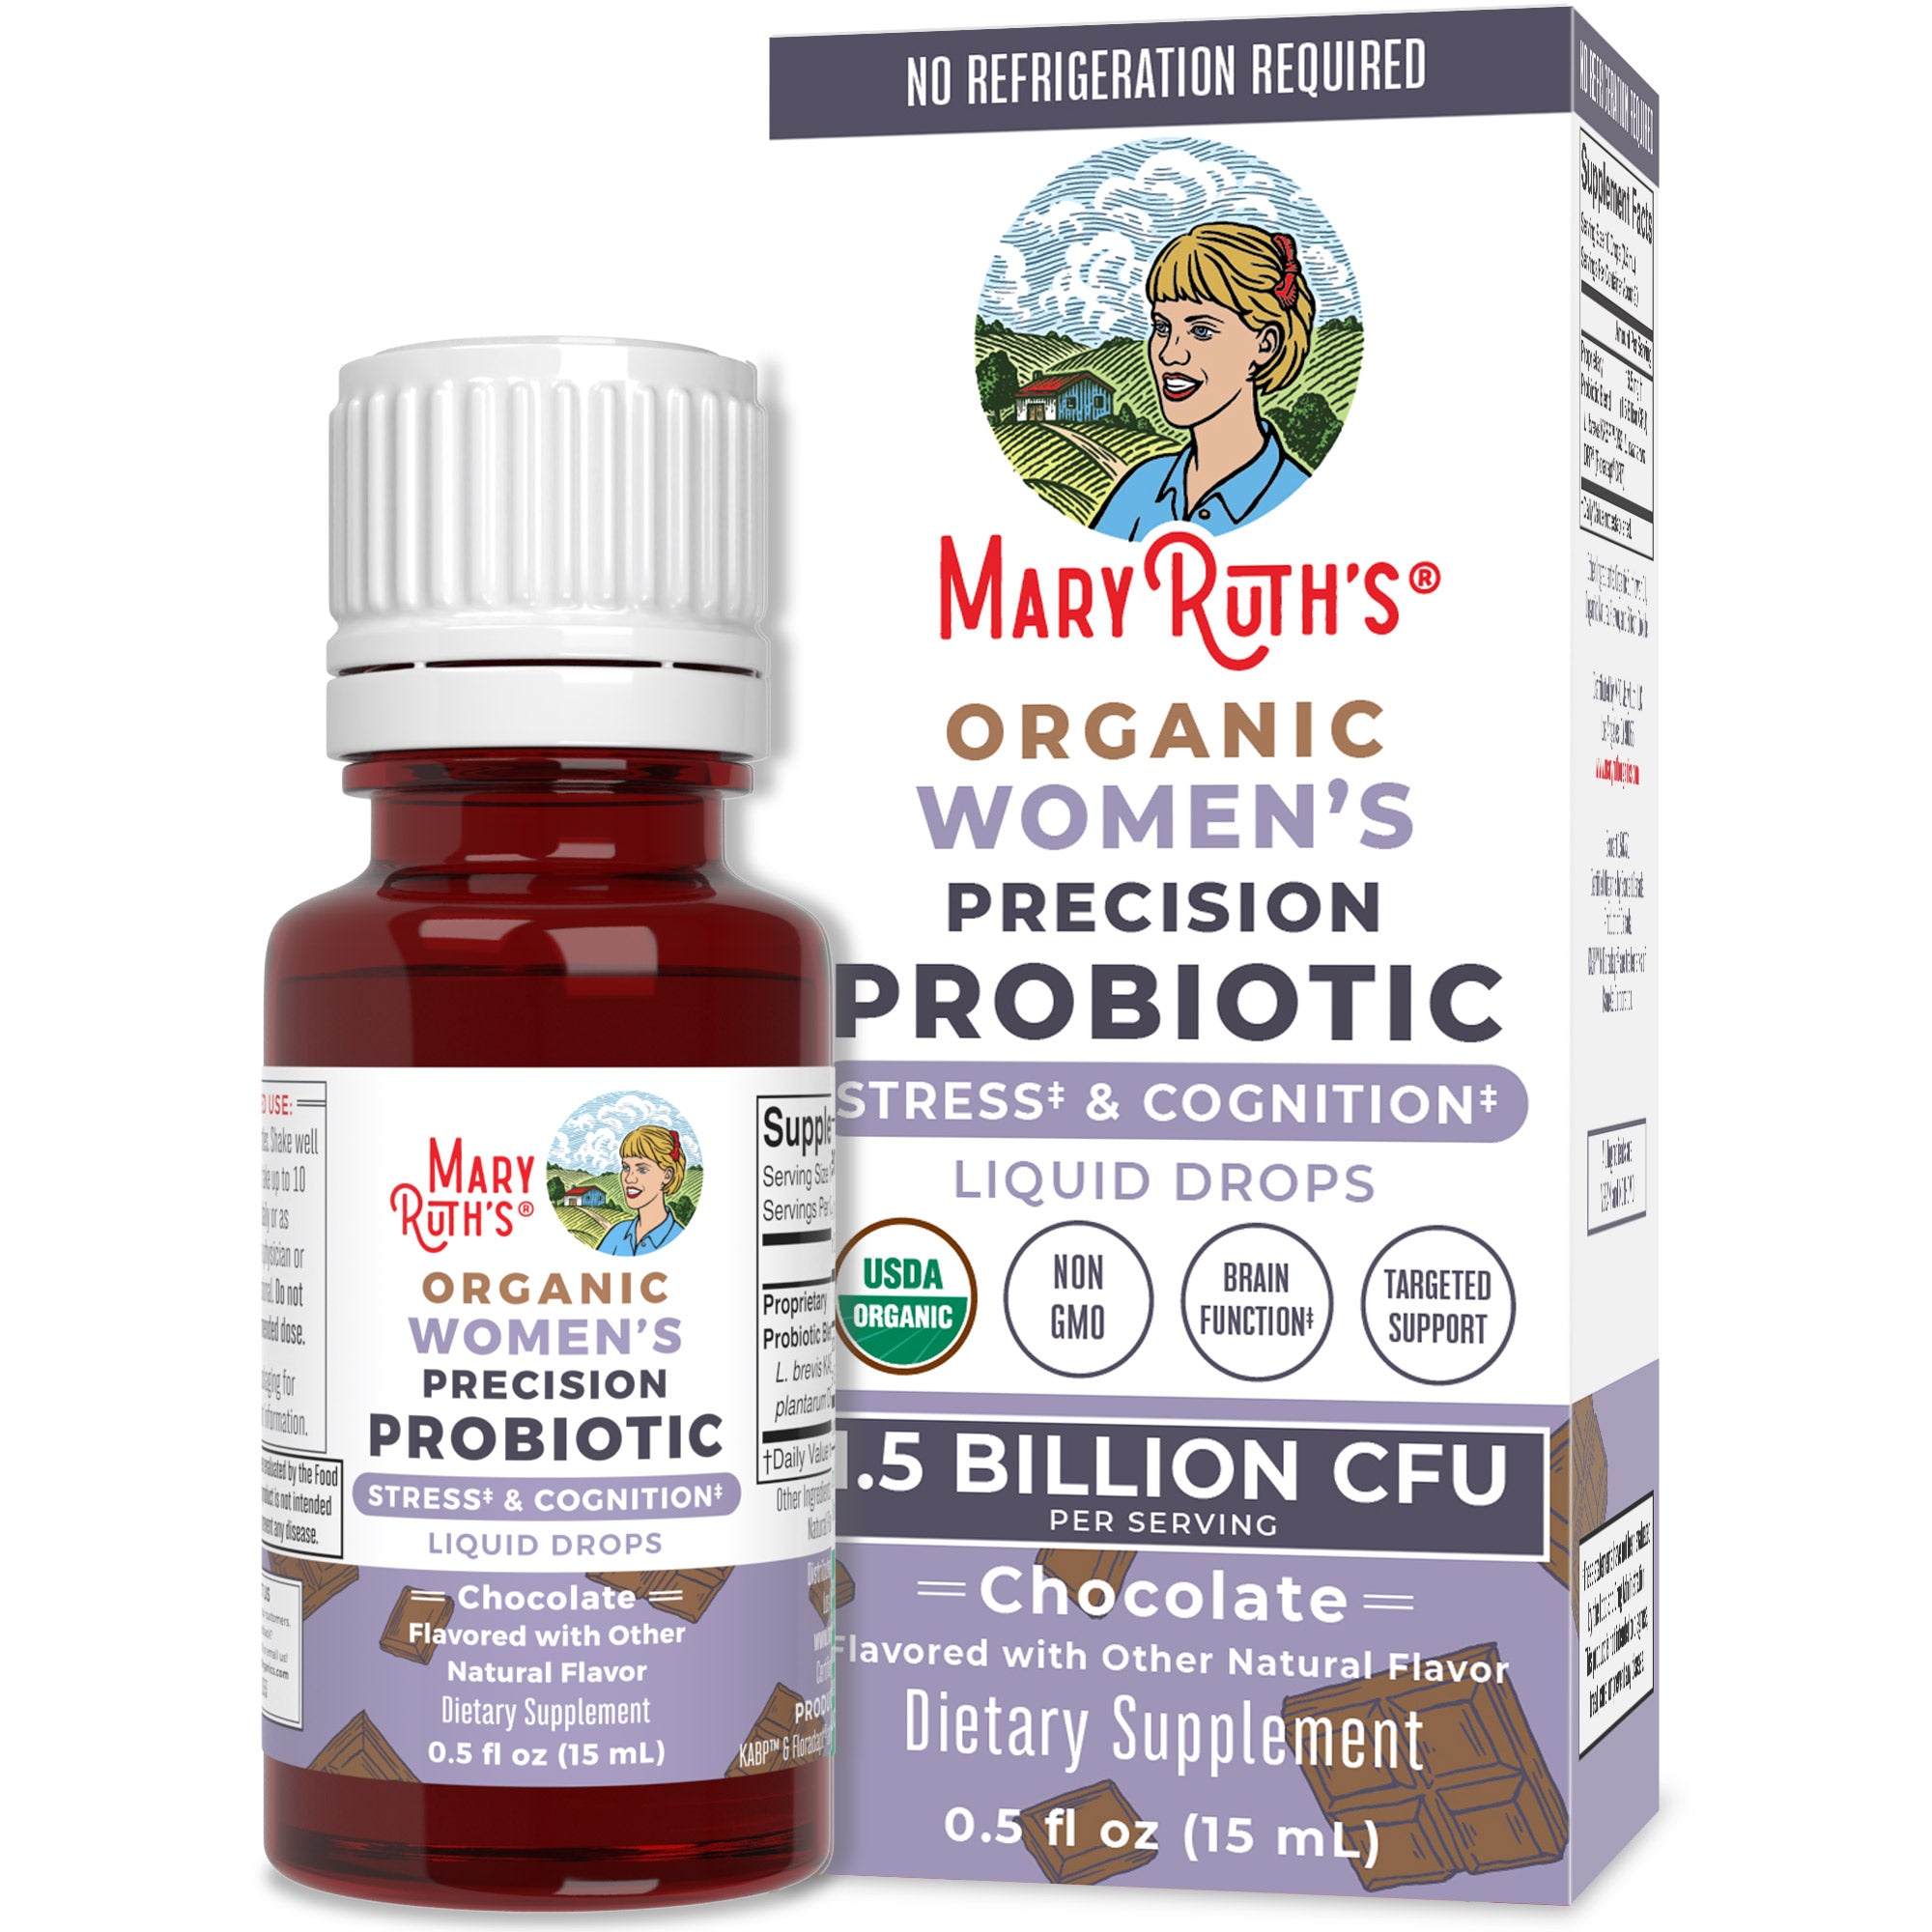 Organic Women's Precision Probiotic Stress & Cognition Liquid Drops